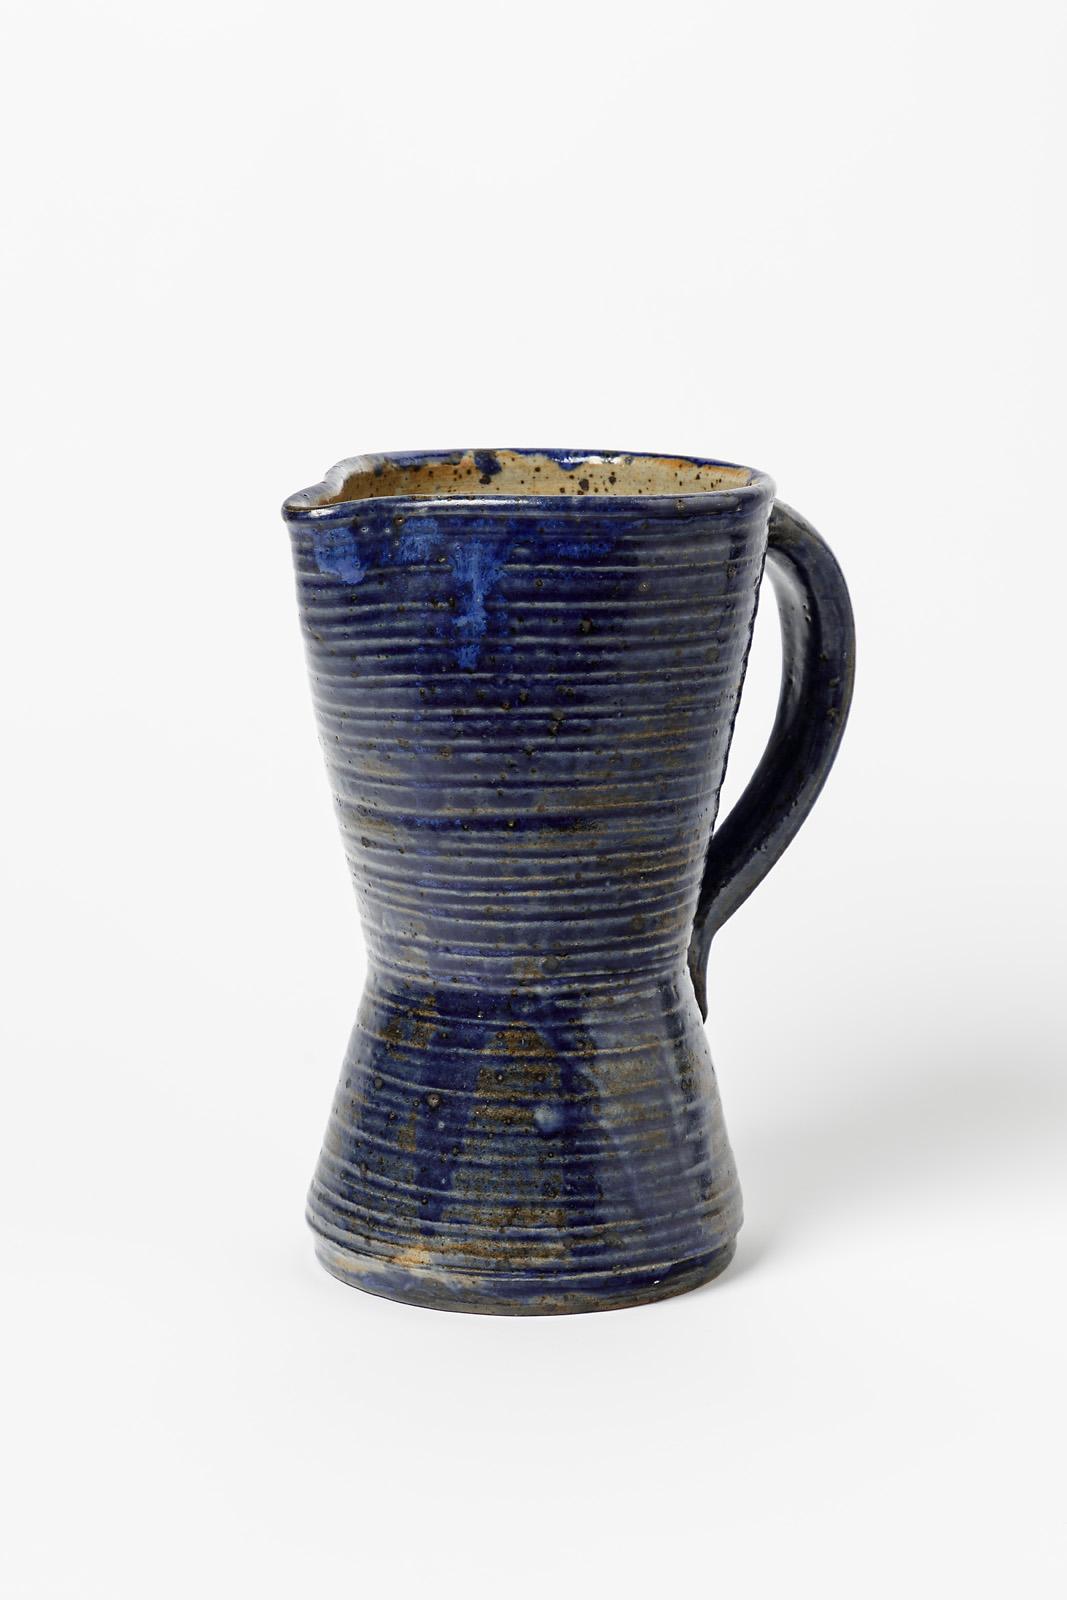 Marius Bernon

Art deco stoneware ceramic pitcher realised in la Borne

Circa 1940

Blue stoneware ceramic glaze colors

Signed under the base

Original perfect condition

Height 23 cm
Large 20 cm